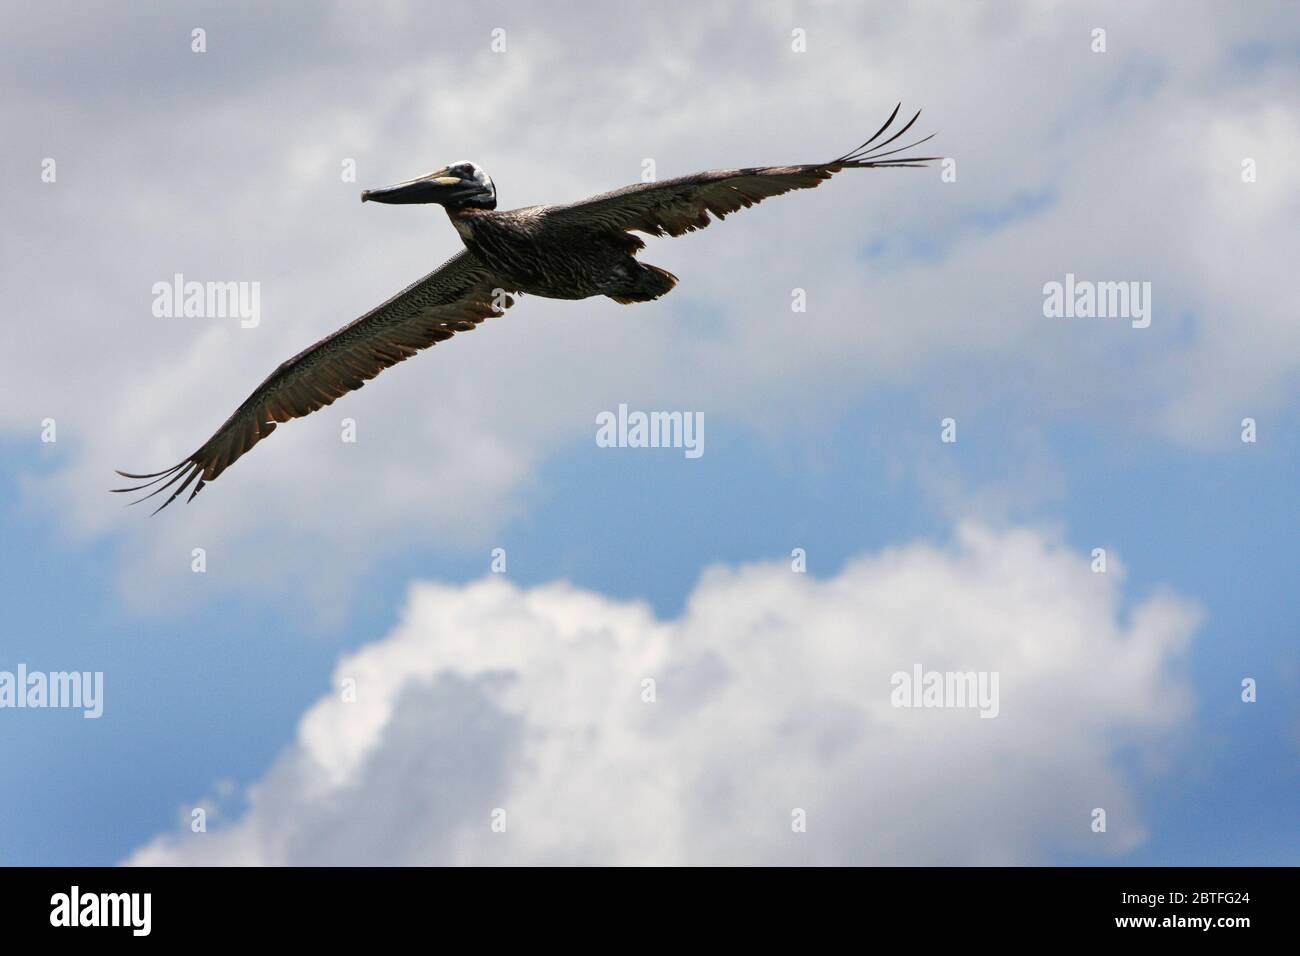 A pelican in flight. Stock Photo